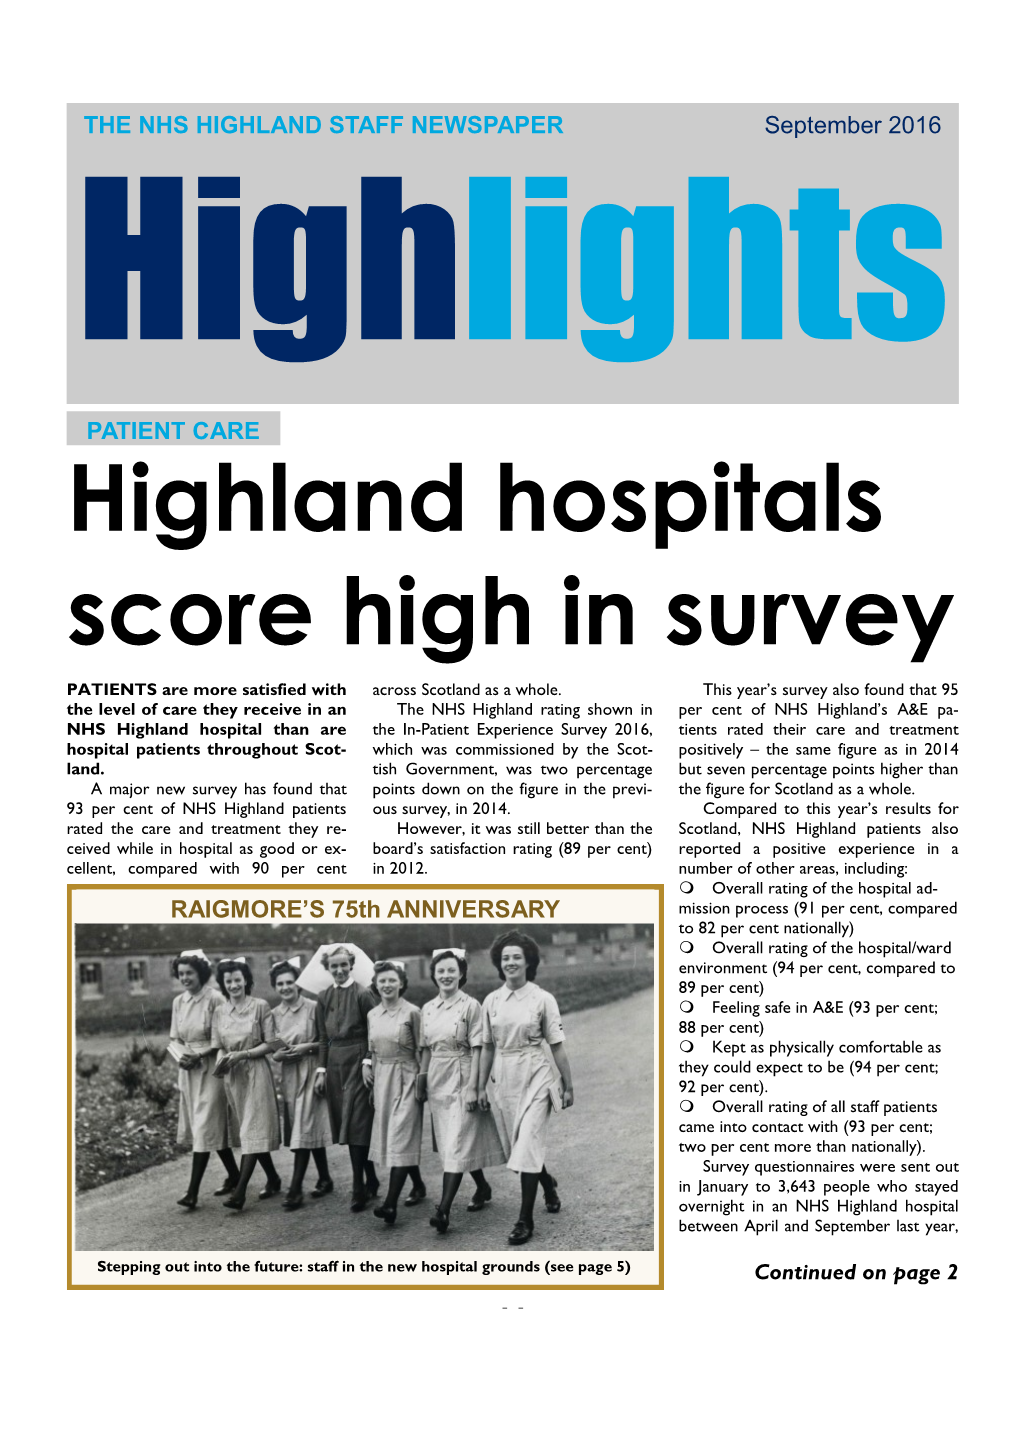 Highland Hospitals Score High in Survey